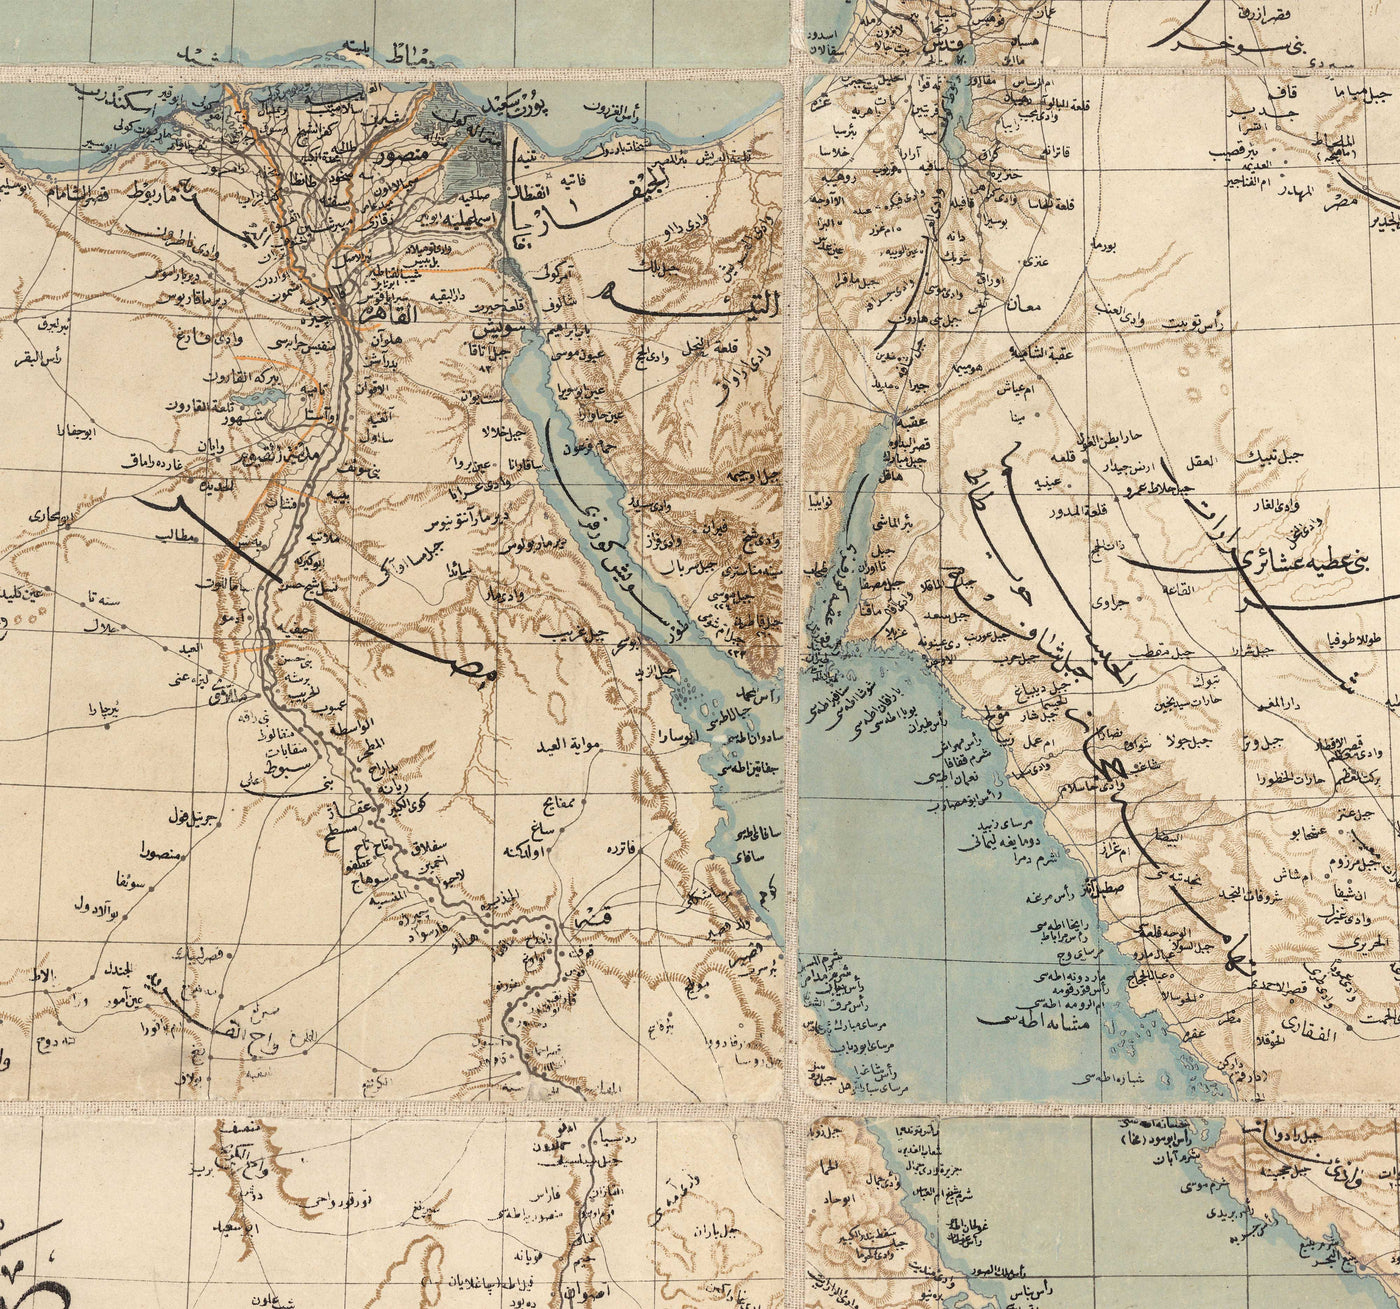 Alte Karte des Nahen Ostens in arabischer Schrift, 1890 - Osmanisches Reich, Balkan, Arabische Halbinsel, Schwarzmeer